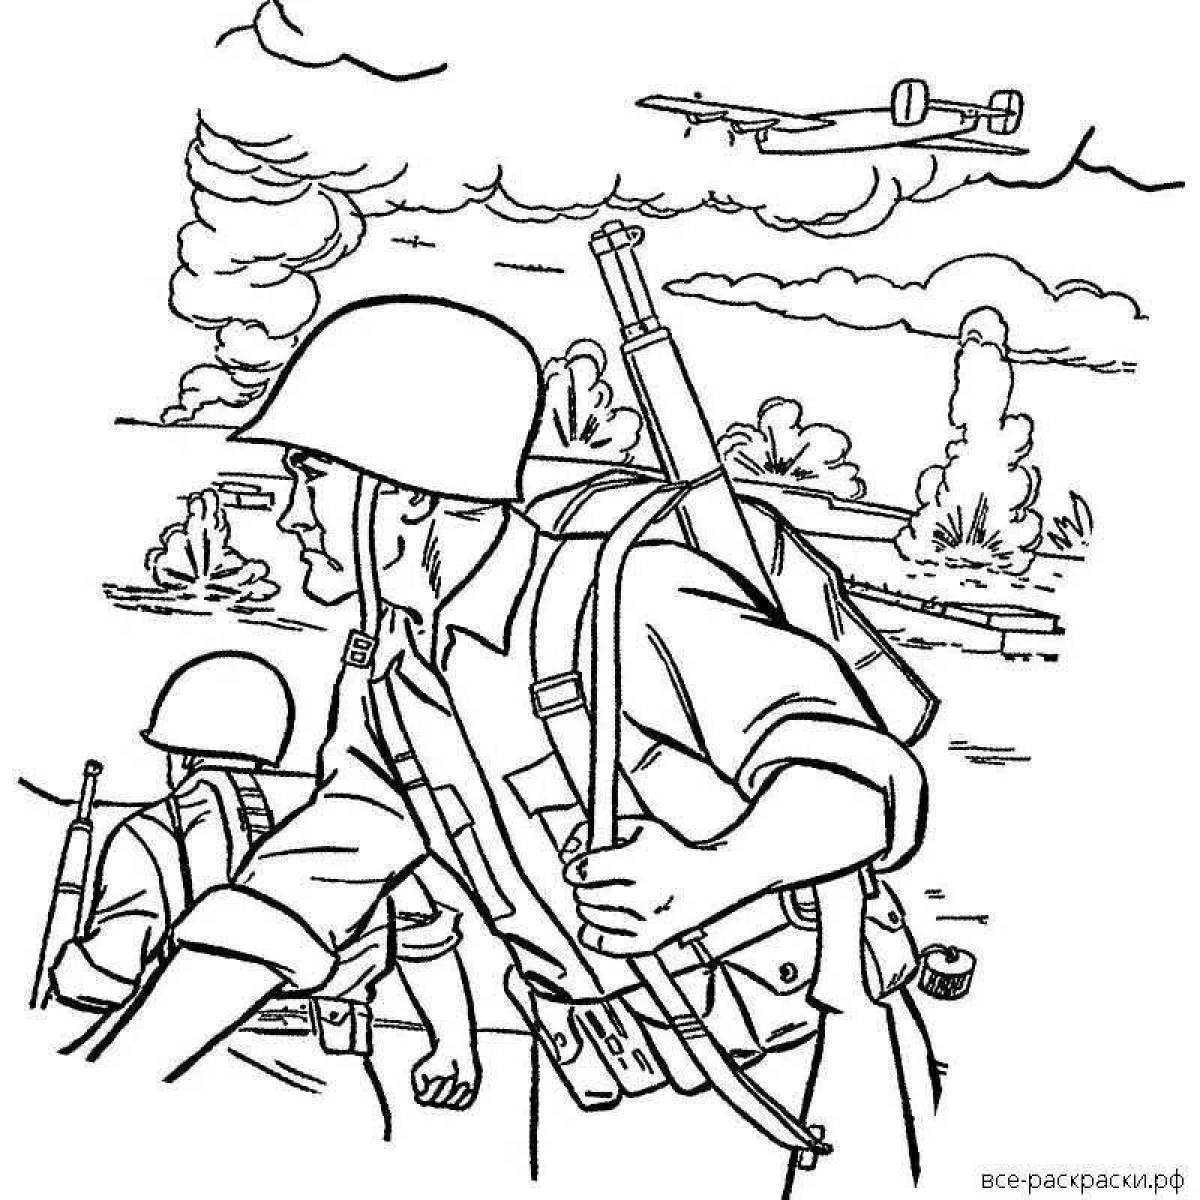 Heroic coloring battle for stalingrad